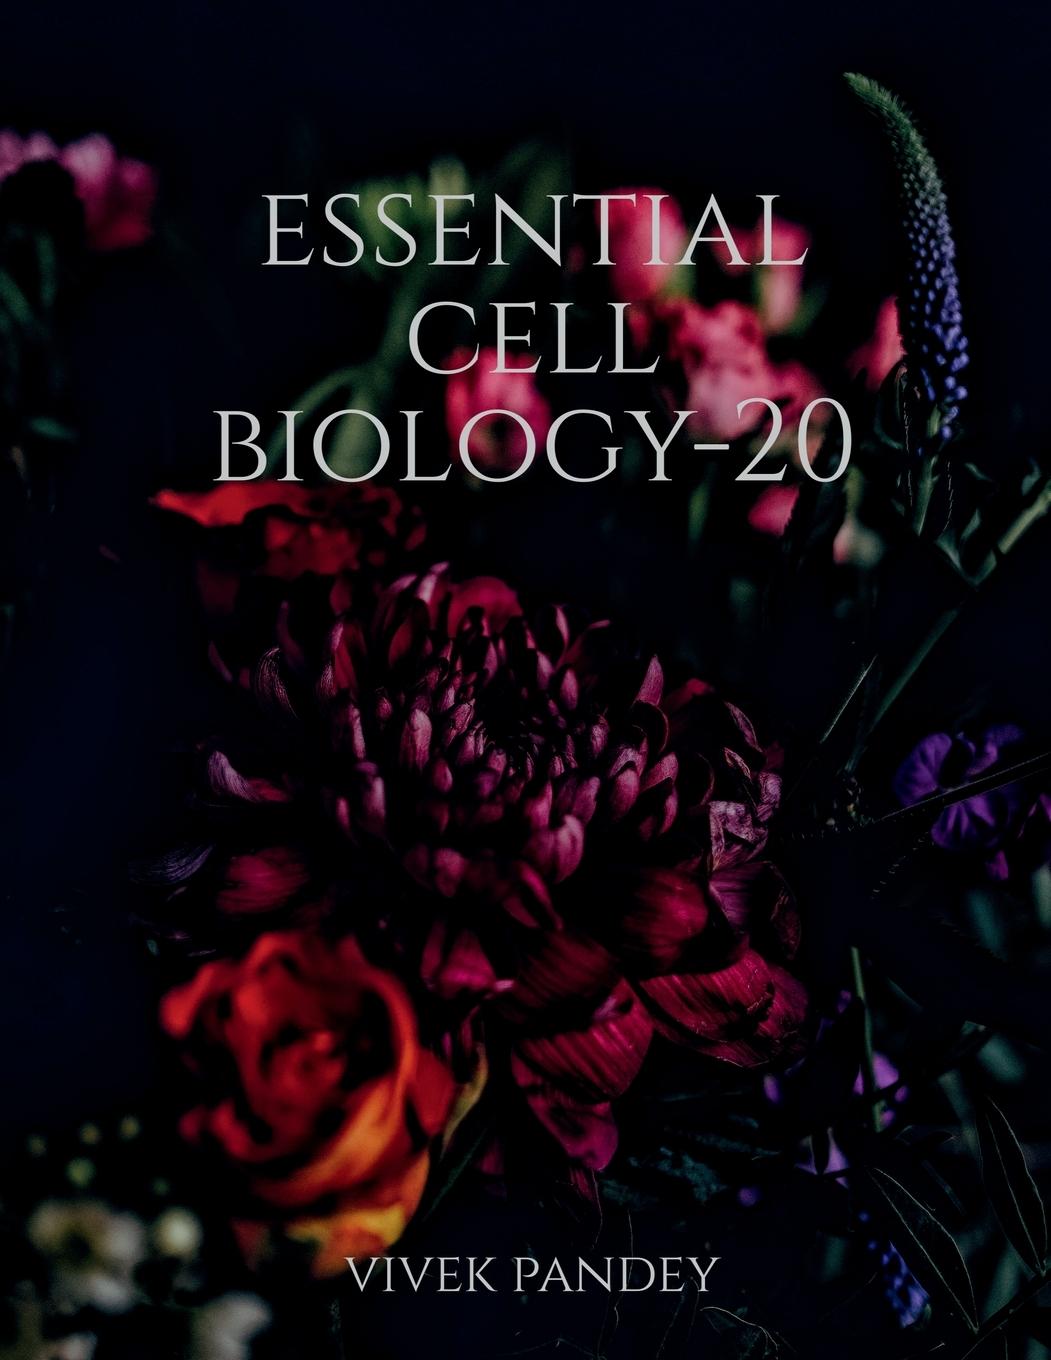 Книга Essential cell biology-20 